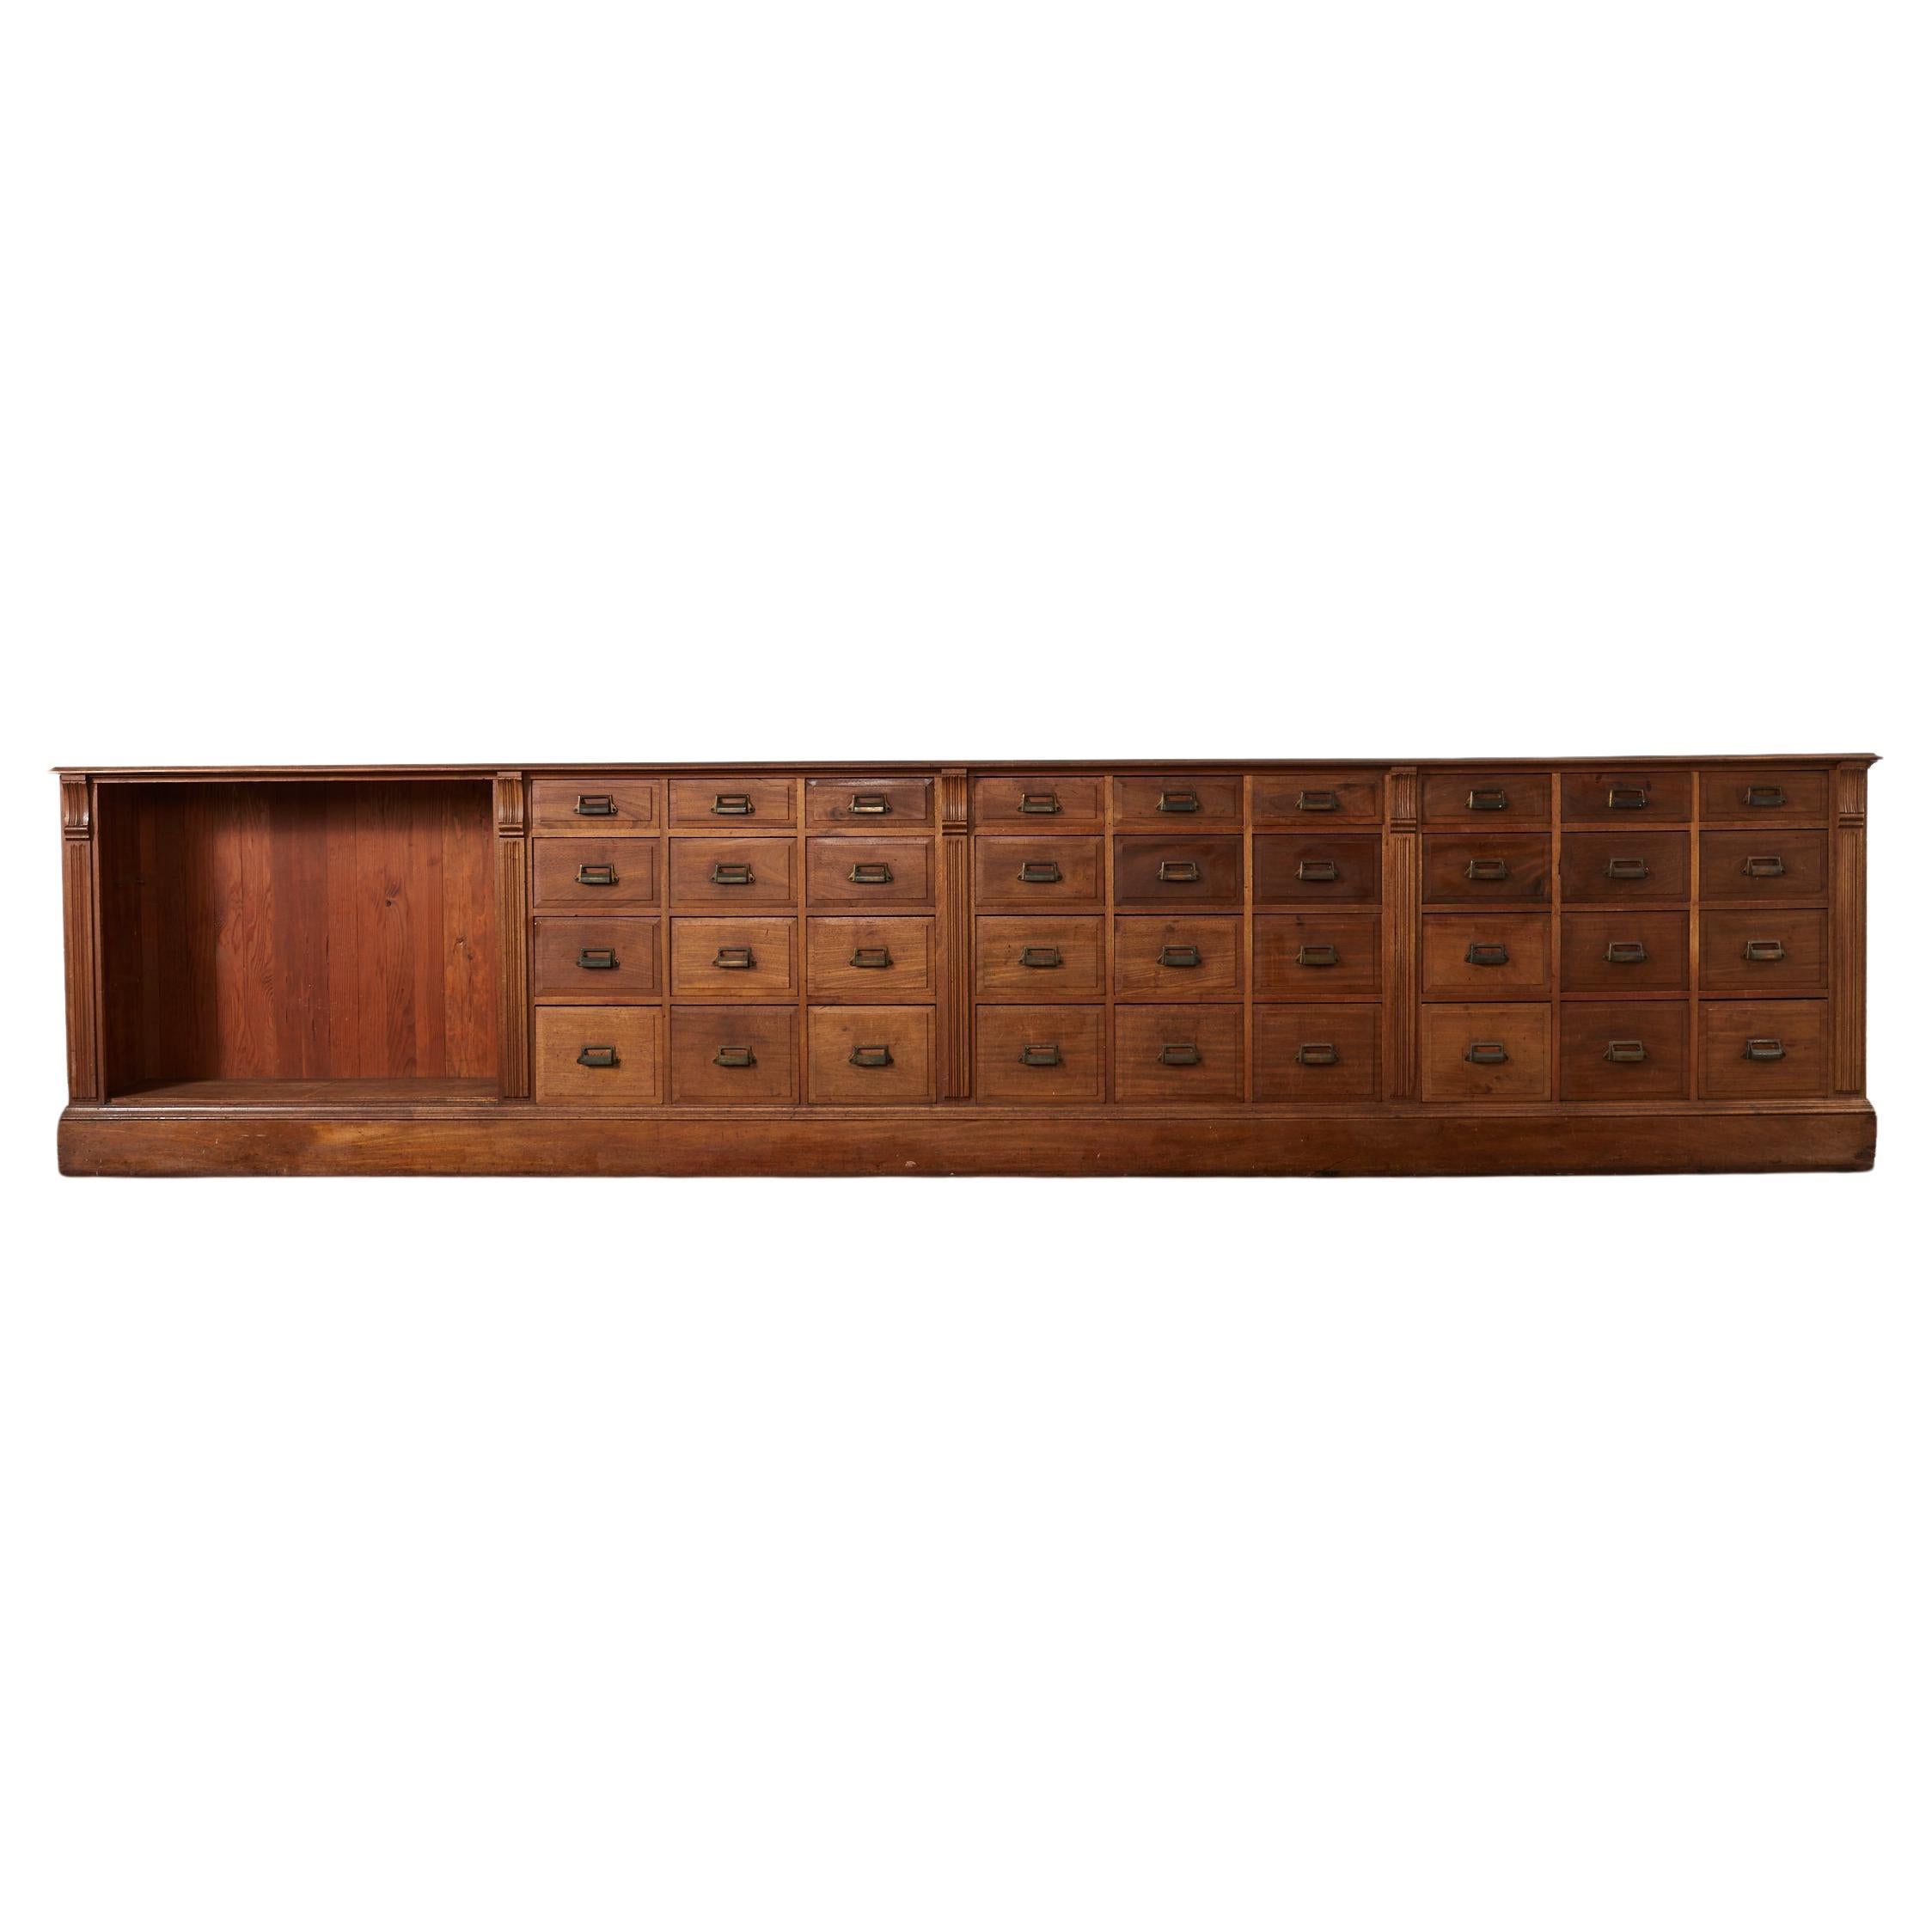 19th Century English Millinery Haberdashery Hardwood Apothecary Cabinet  For Sale